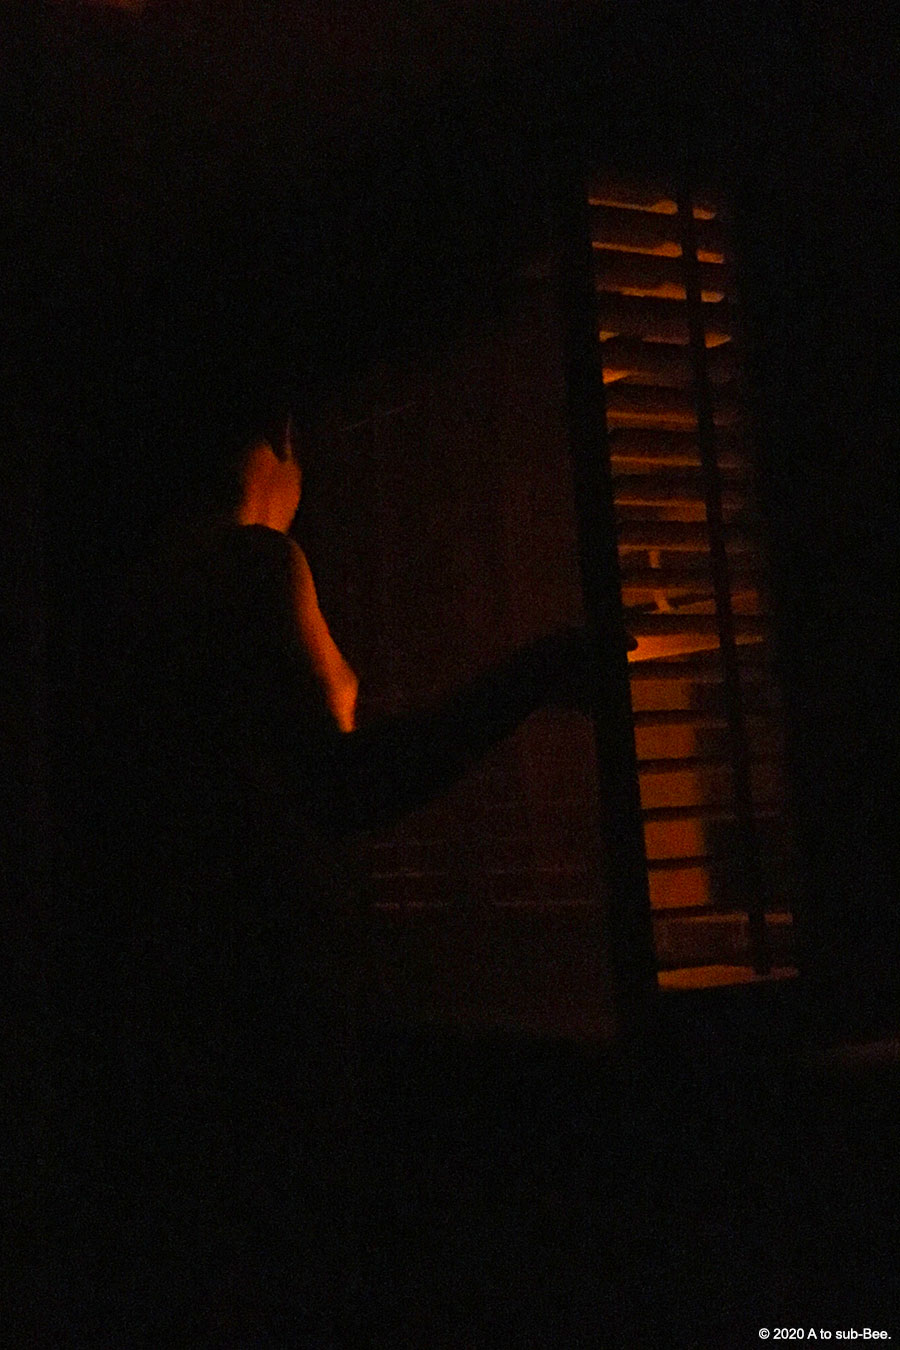 Bee-Keeper standing in the window watching in the dark